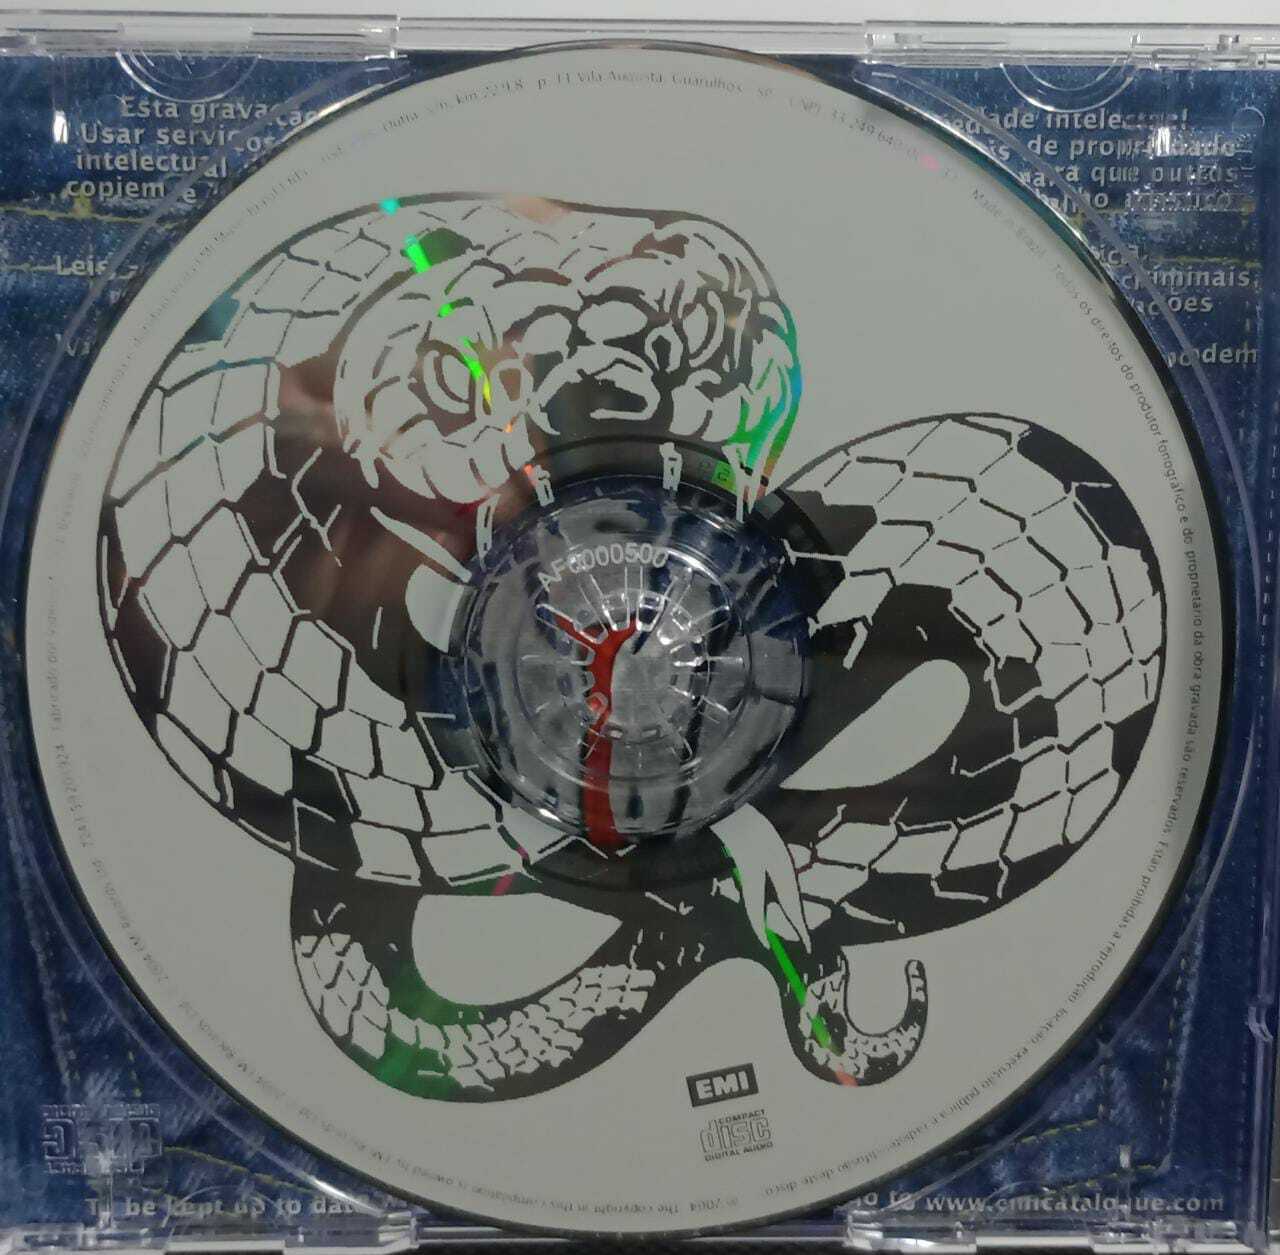 CD - Whitesnake - the Early Years